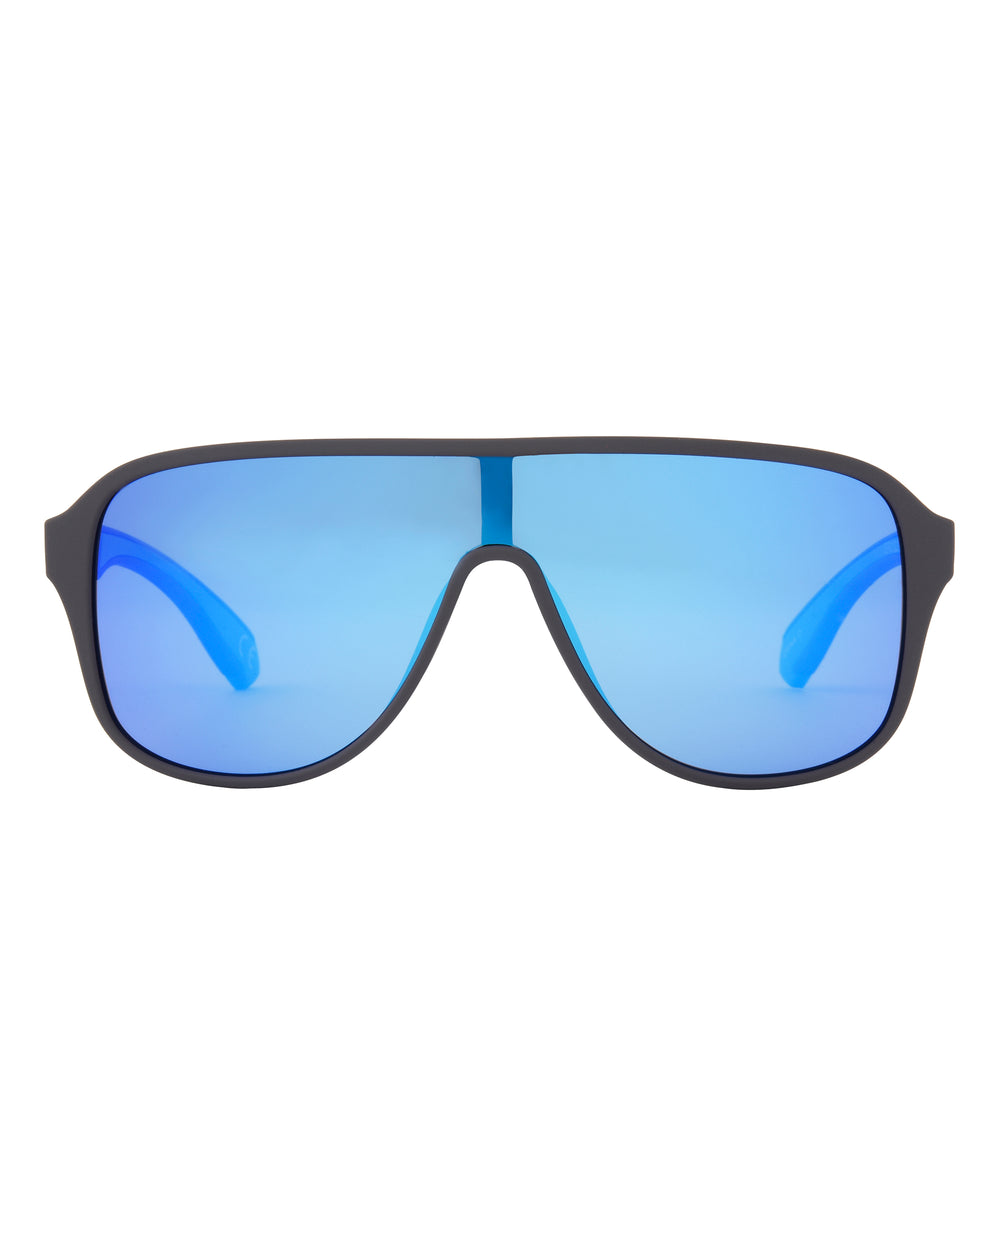 Body Glove Men's Bobby Polarized Shield Sunglasses, Grey, 130 mm